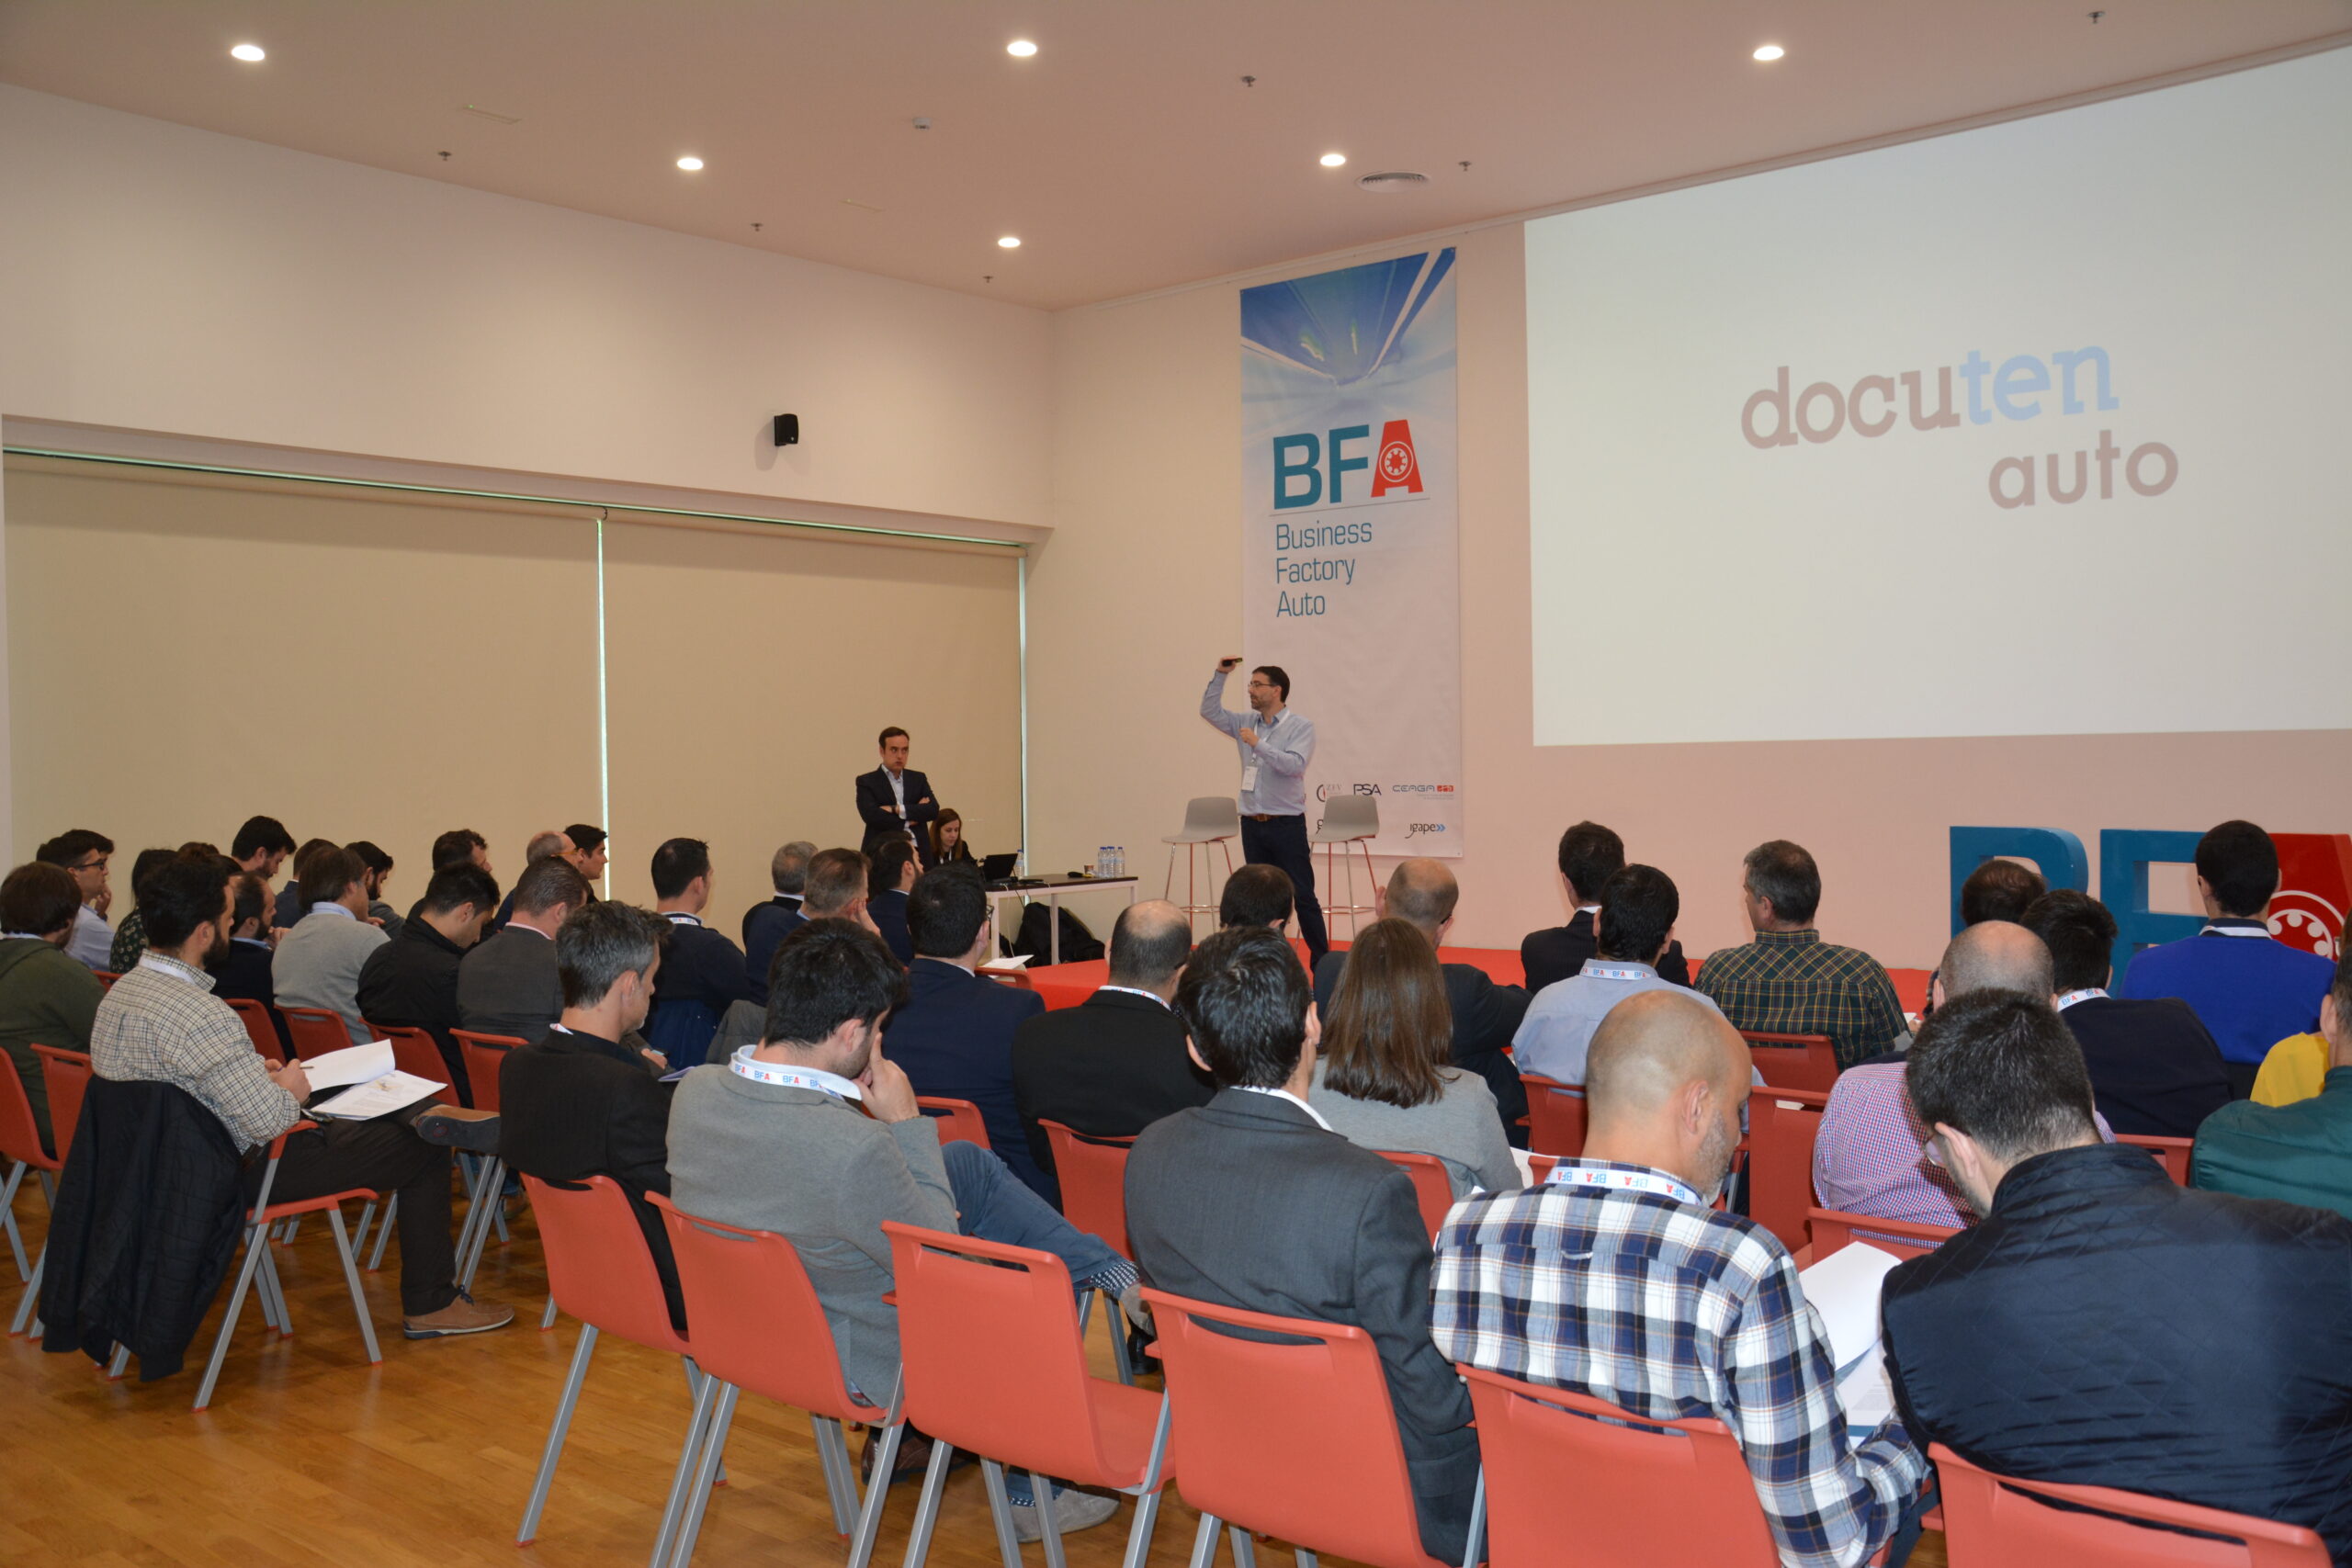 Docuten participa en una jornada networking del Business Factory Auto